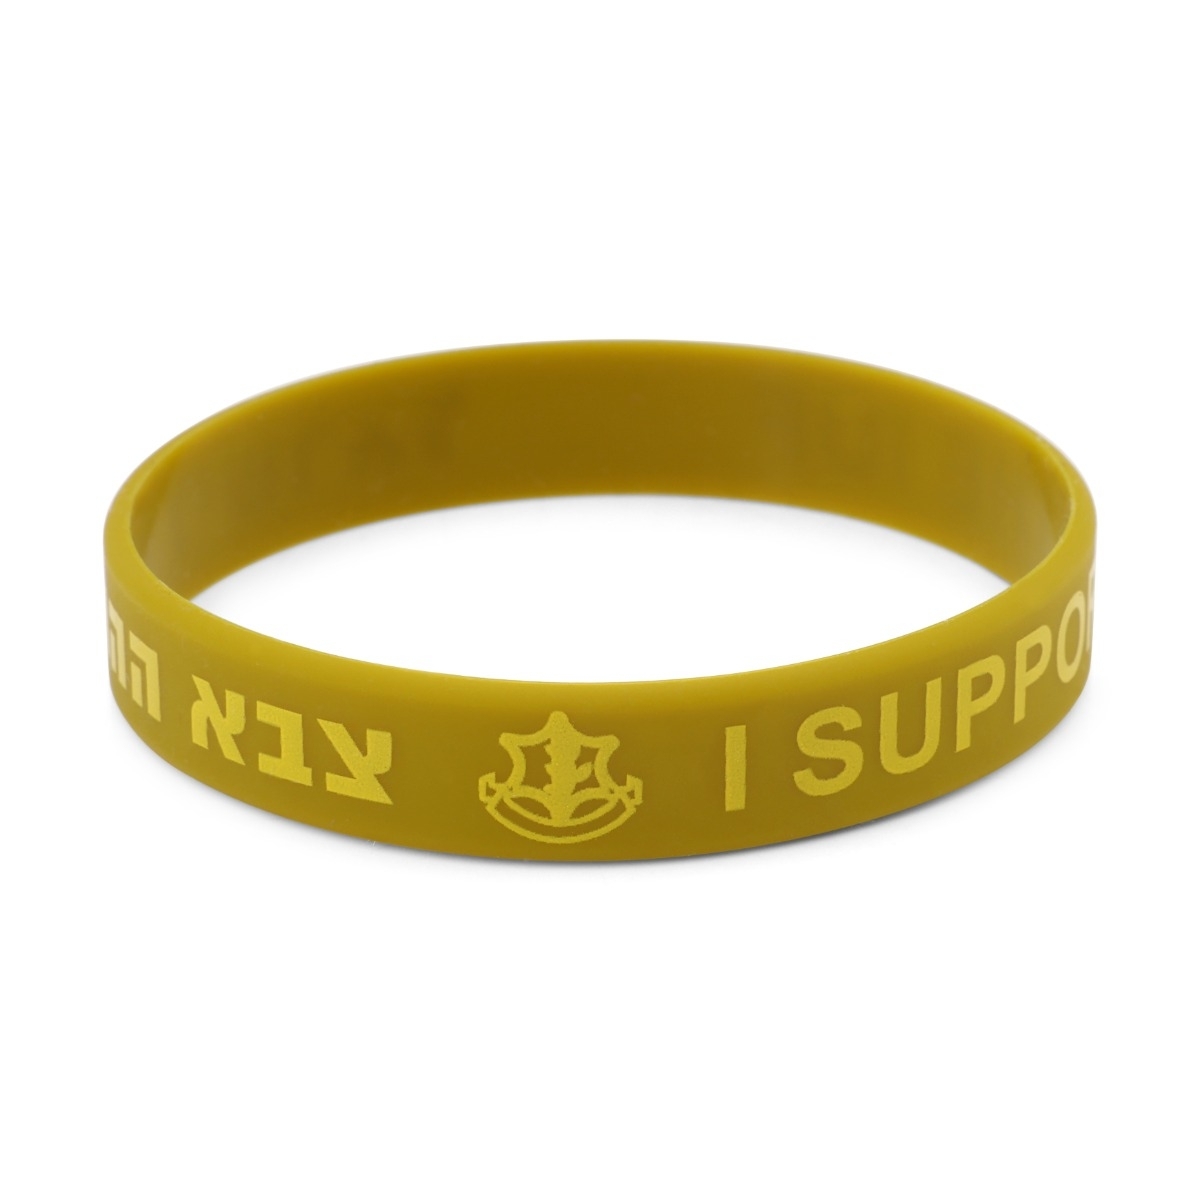 I Support the IDF Green Rubber Bracelet - 1